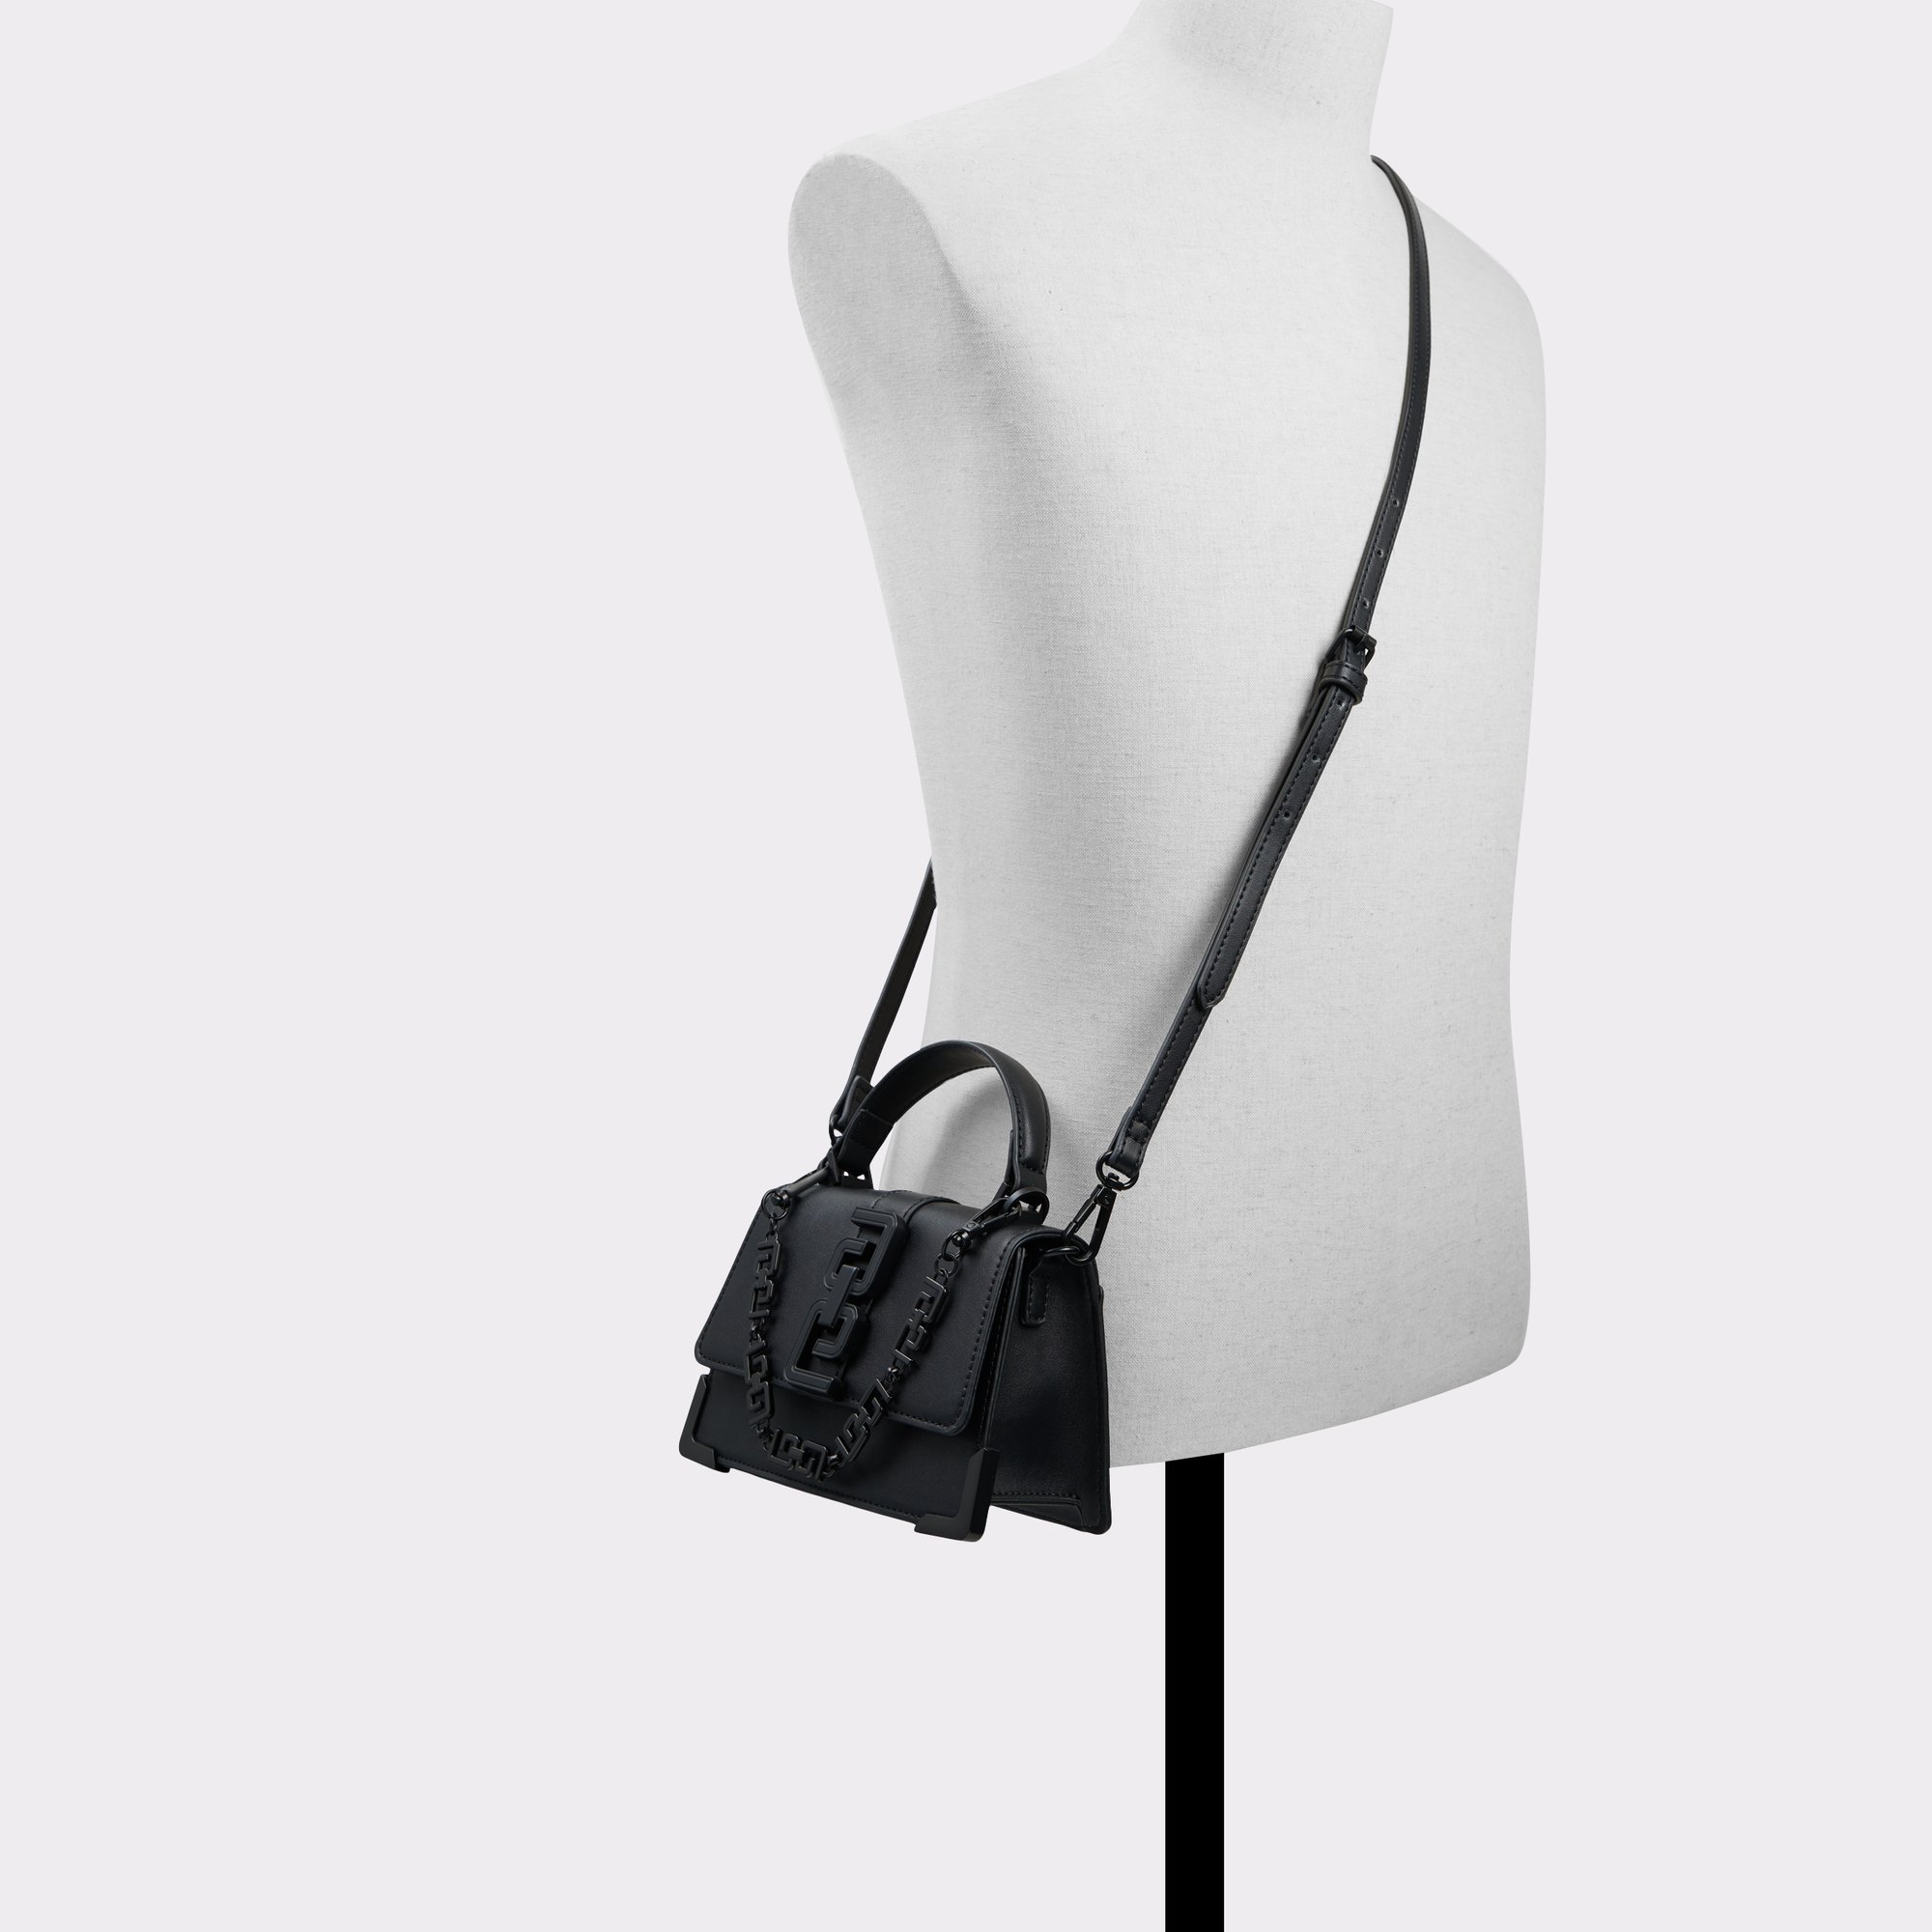 ALDO Women's Powsy Top Handle Bag, Black Overflow: Handbags